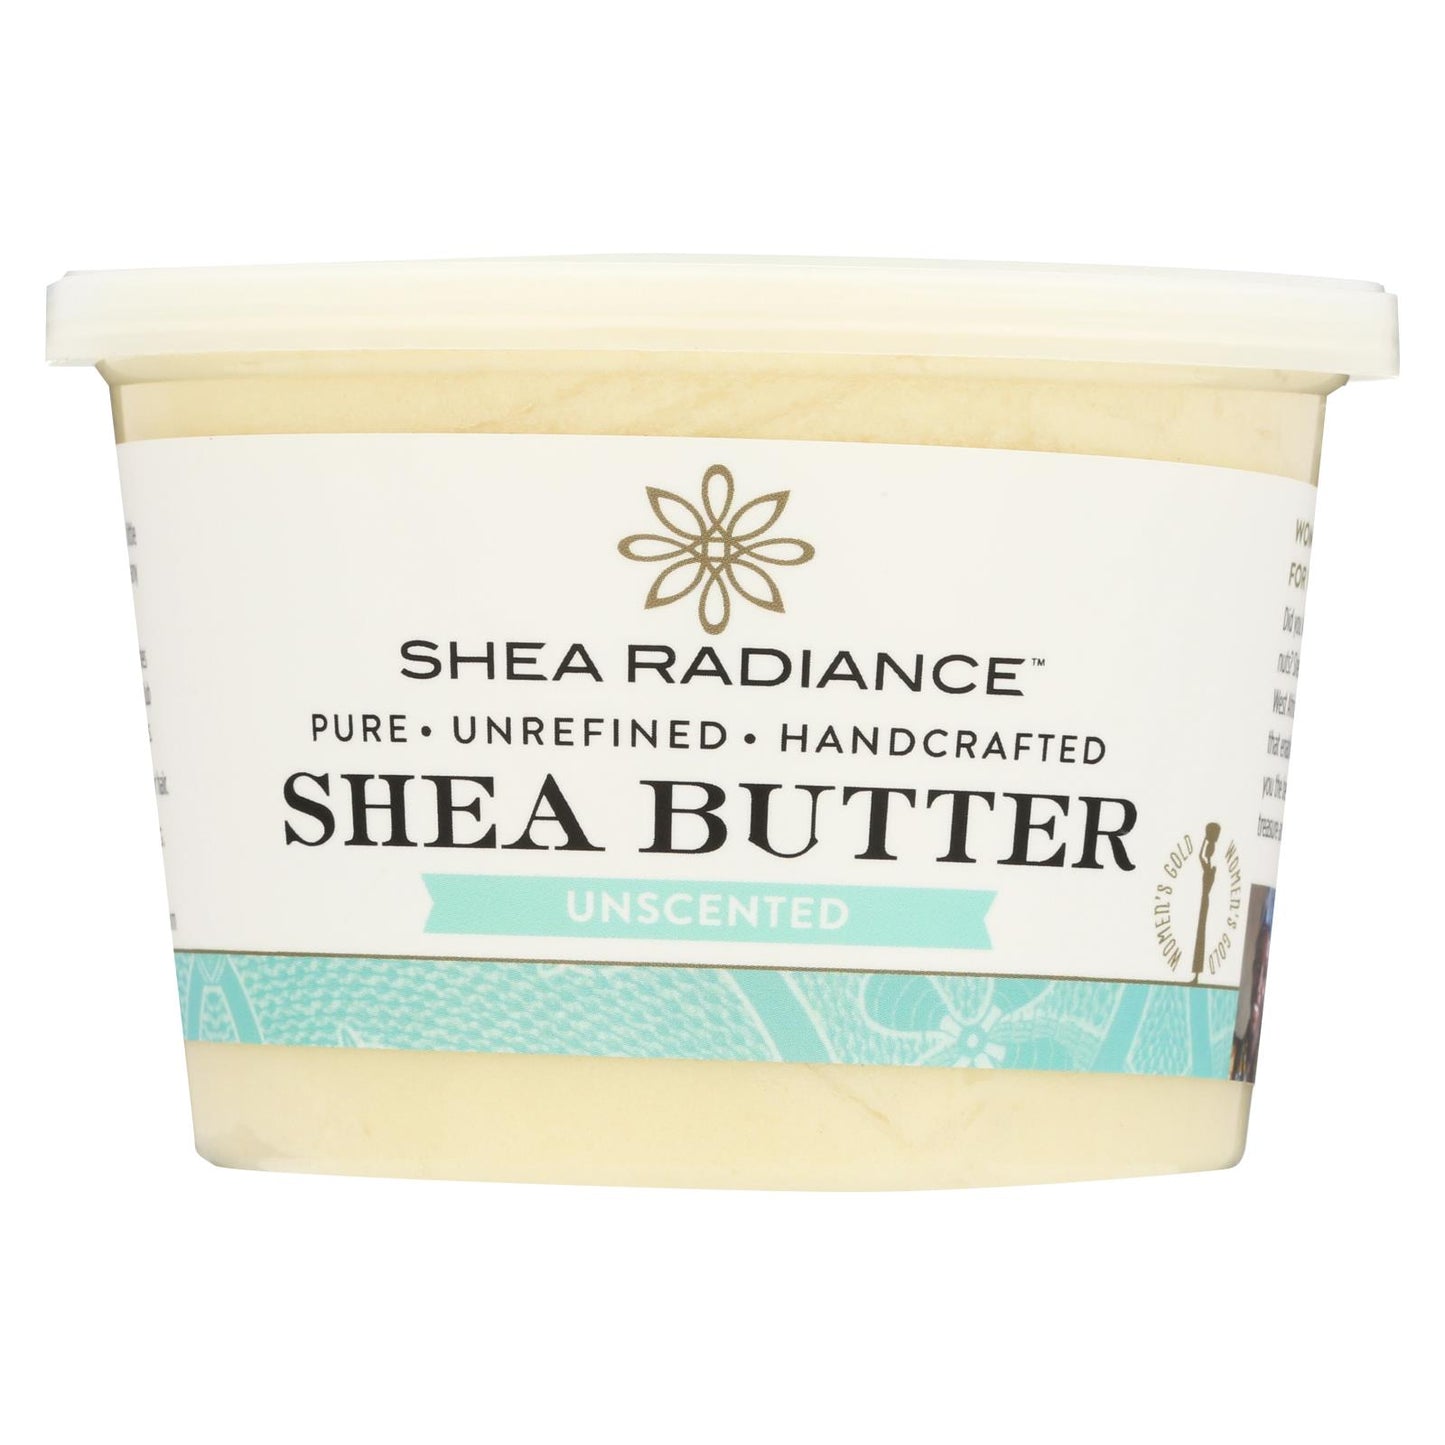 Shea Radiance Unscented Shea Butter  - 1 Each - 14 Oz